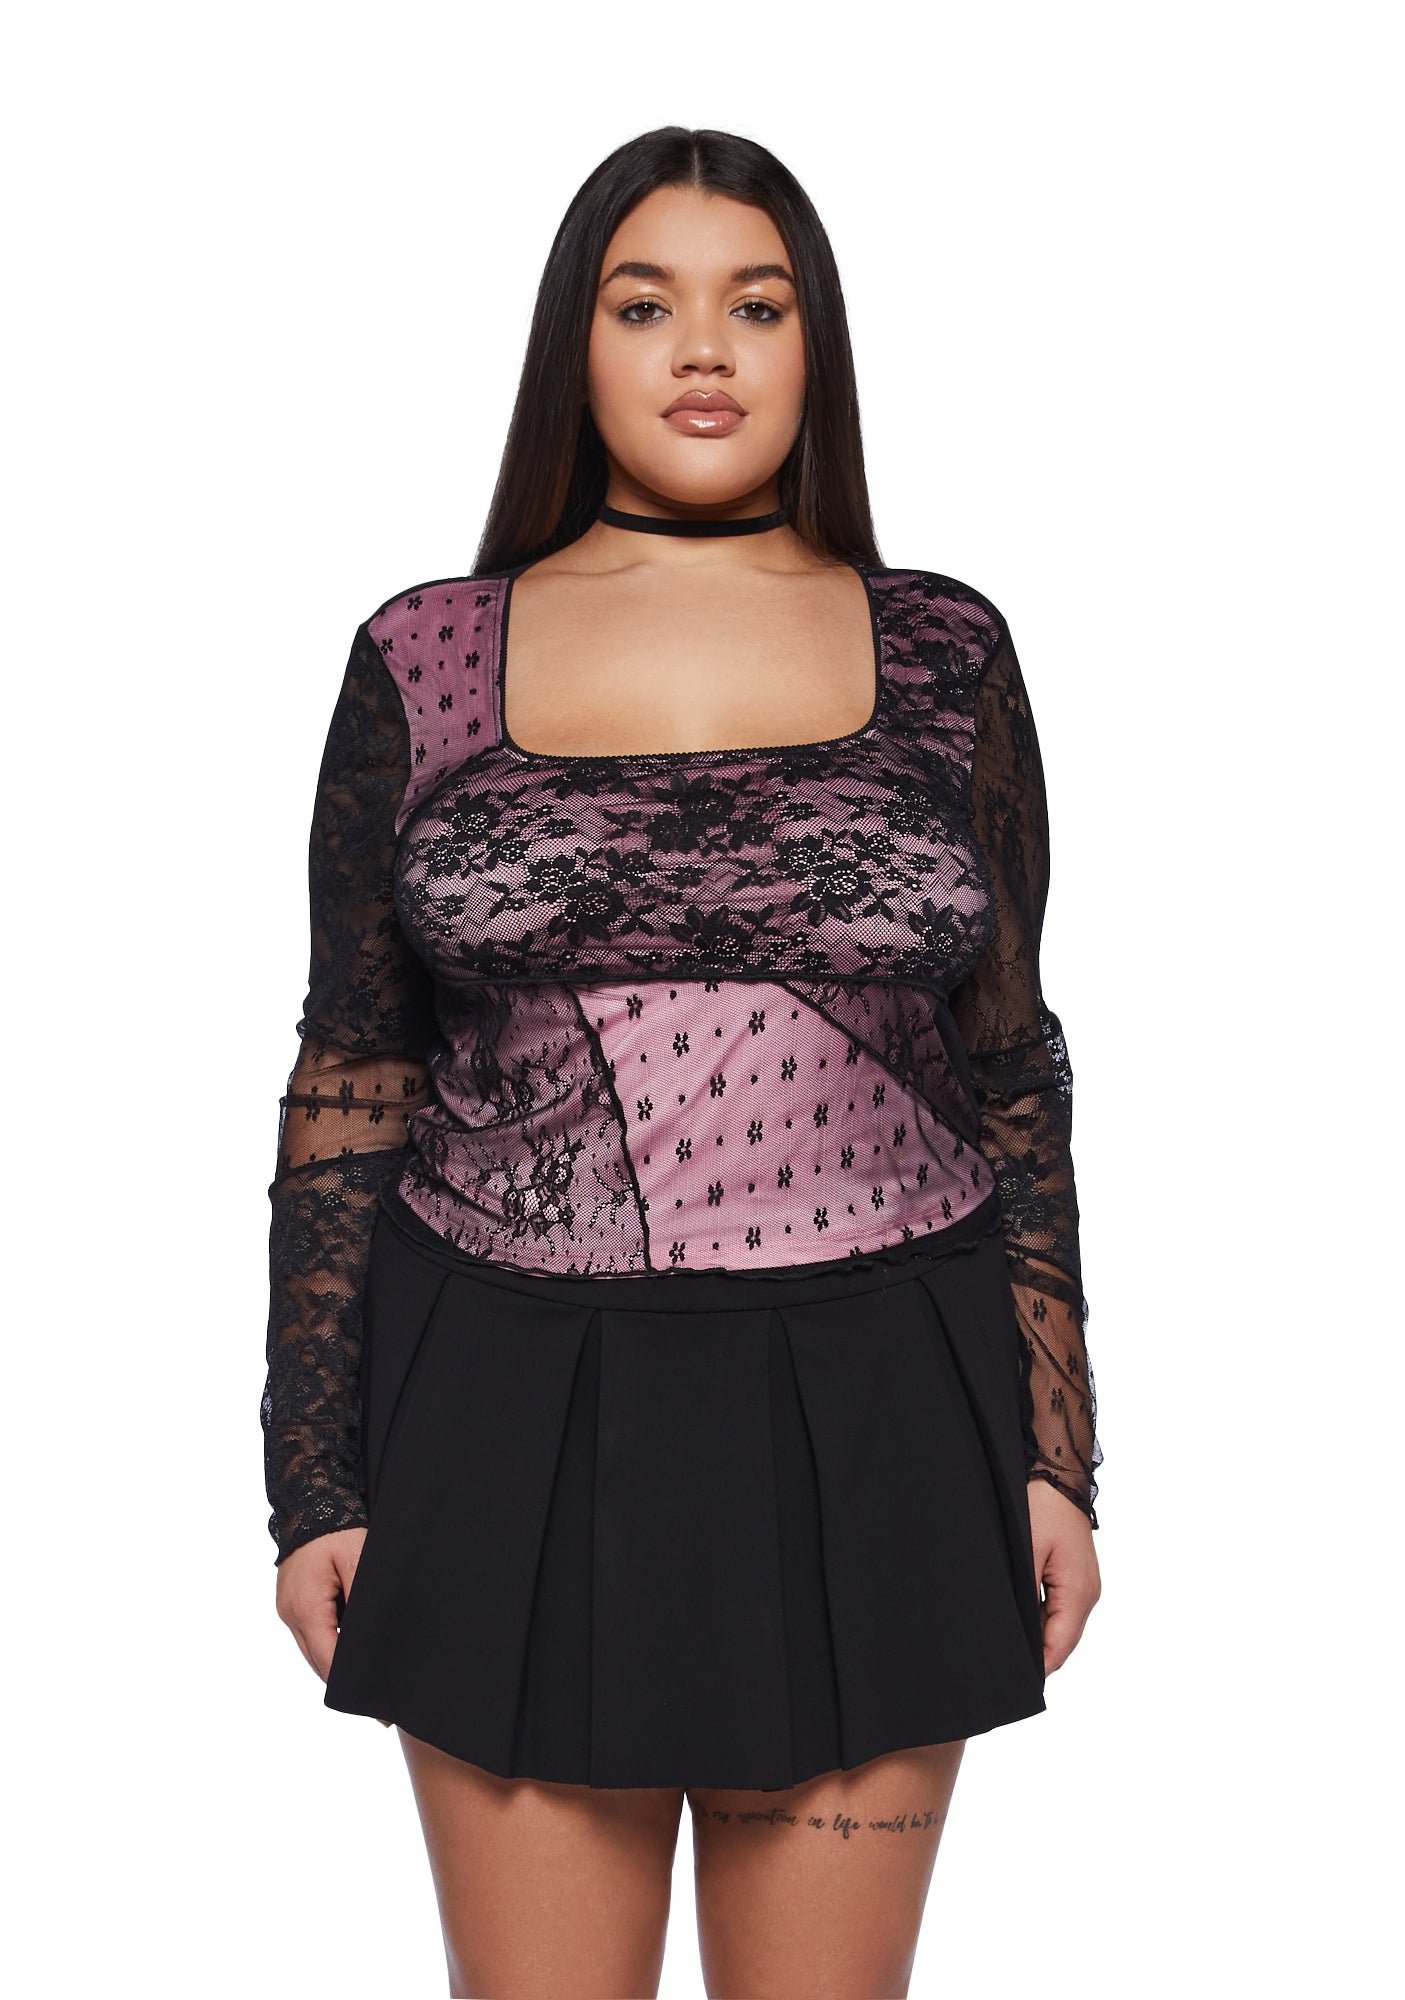 Los Angeles Apparel Bra Bodysuit Black Size XS - $30 (40% Off Retail) -  From Avery